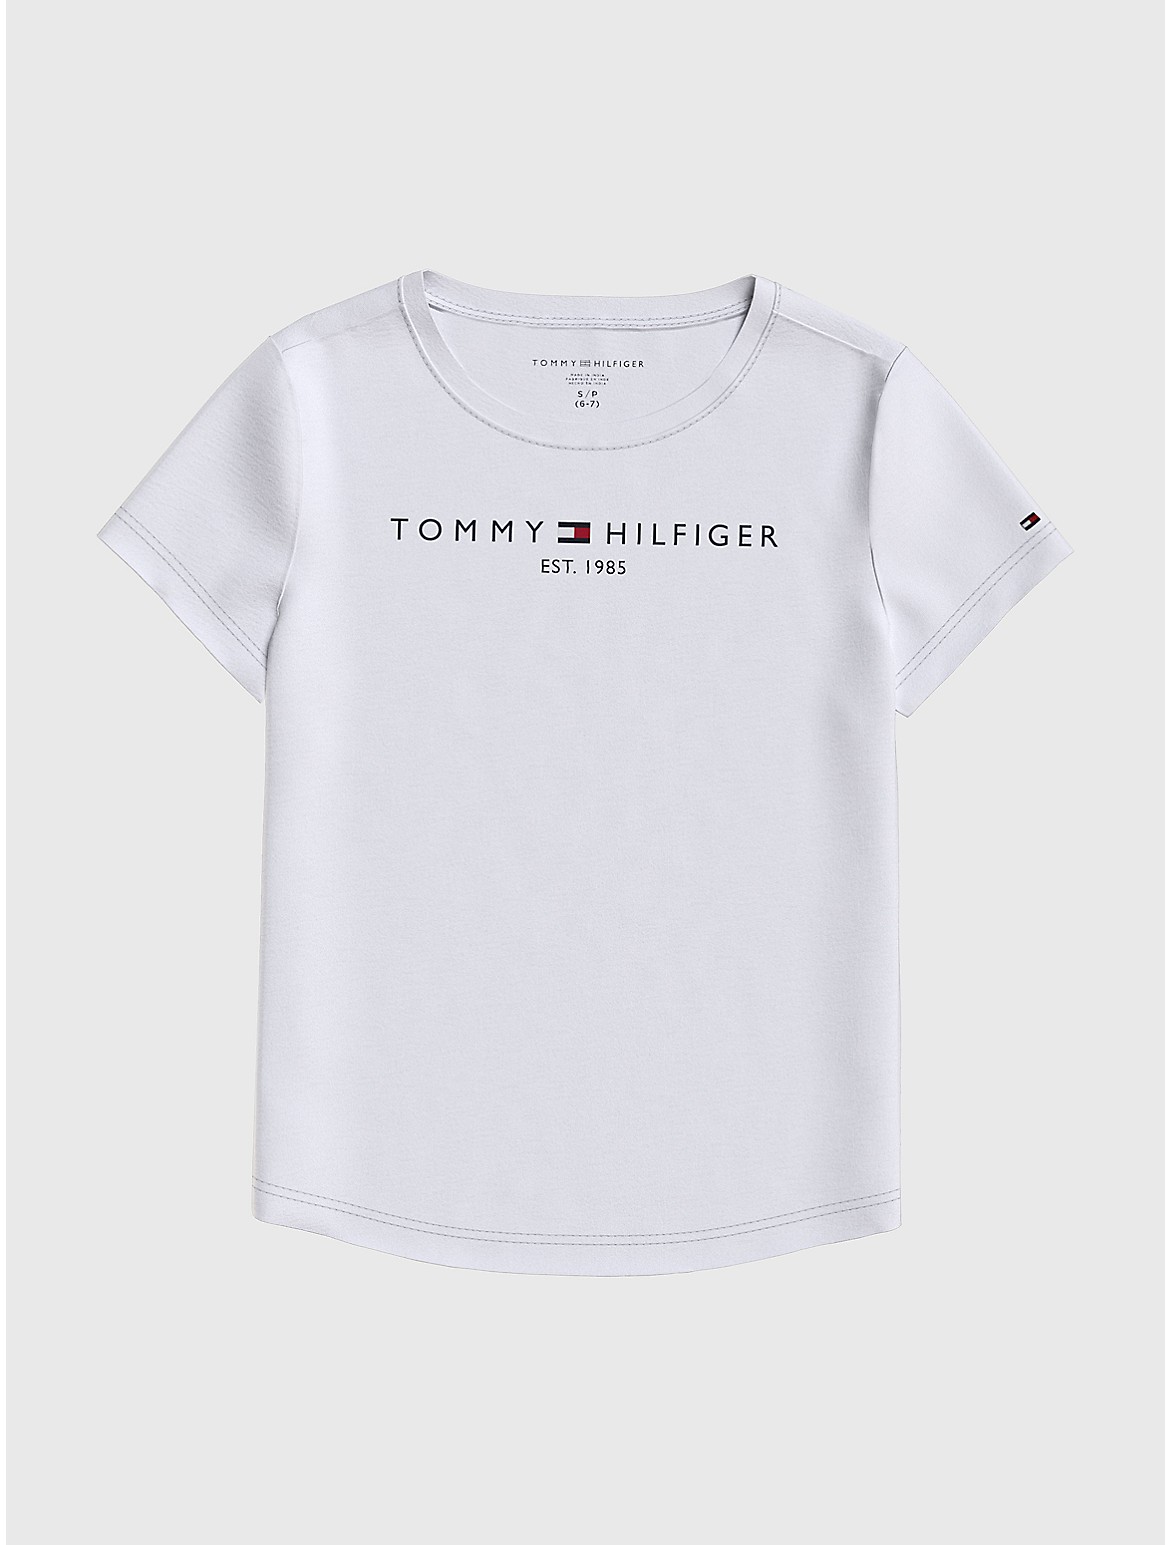 Tommy Hilfiger Girls' Kids' Hilfiger Logo T-Shirt - White - S